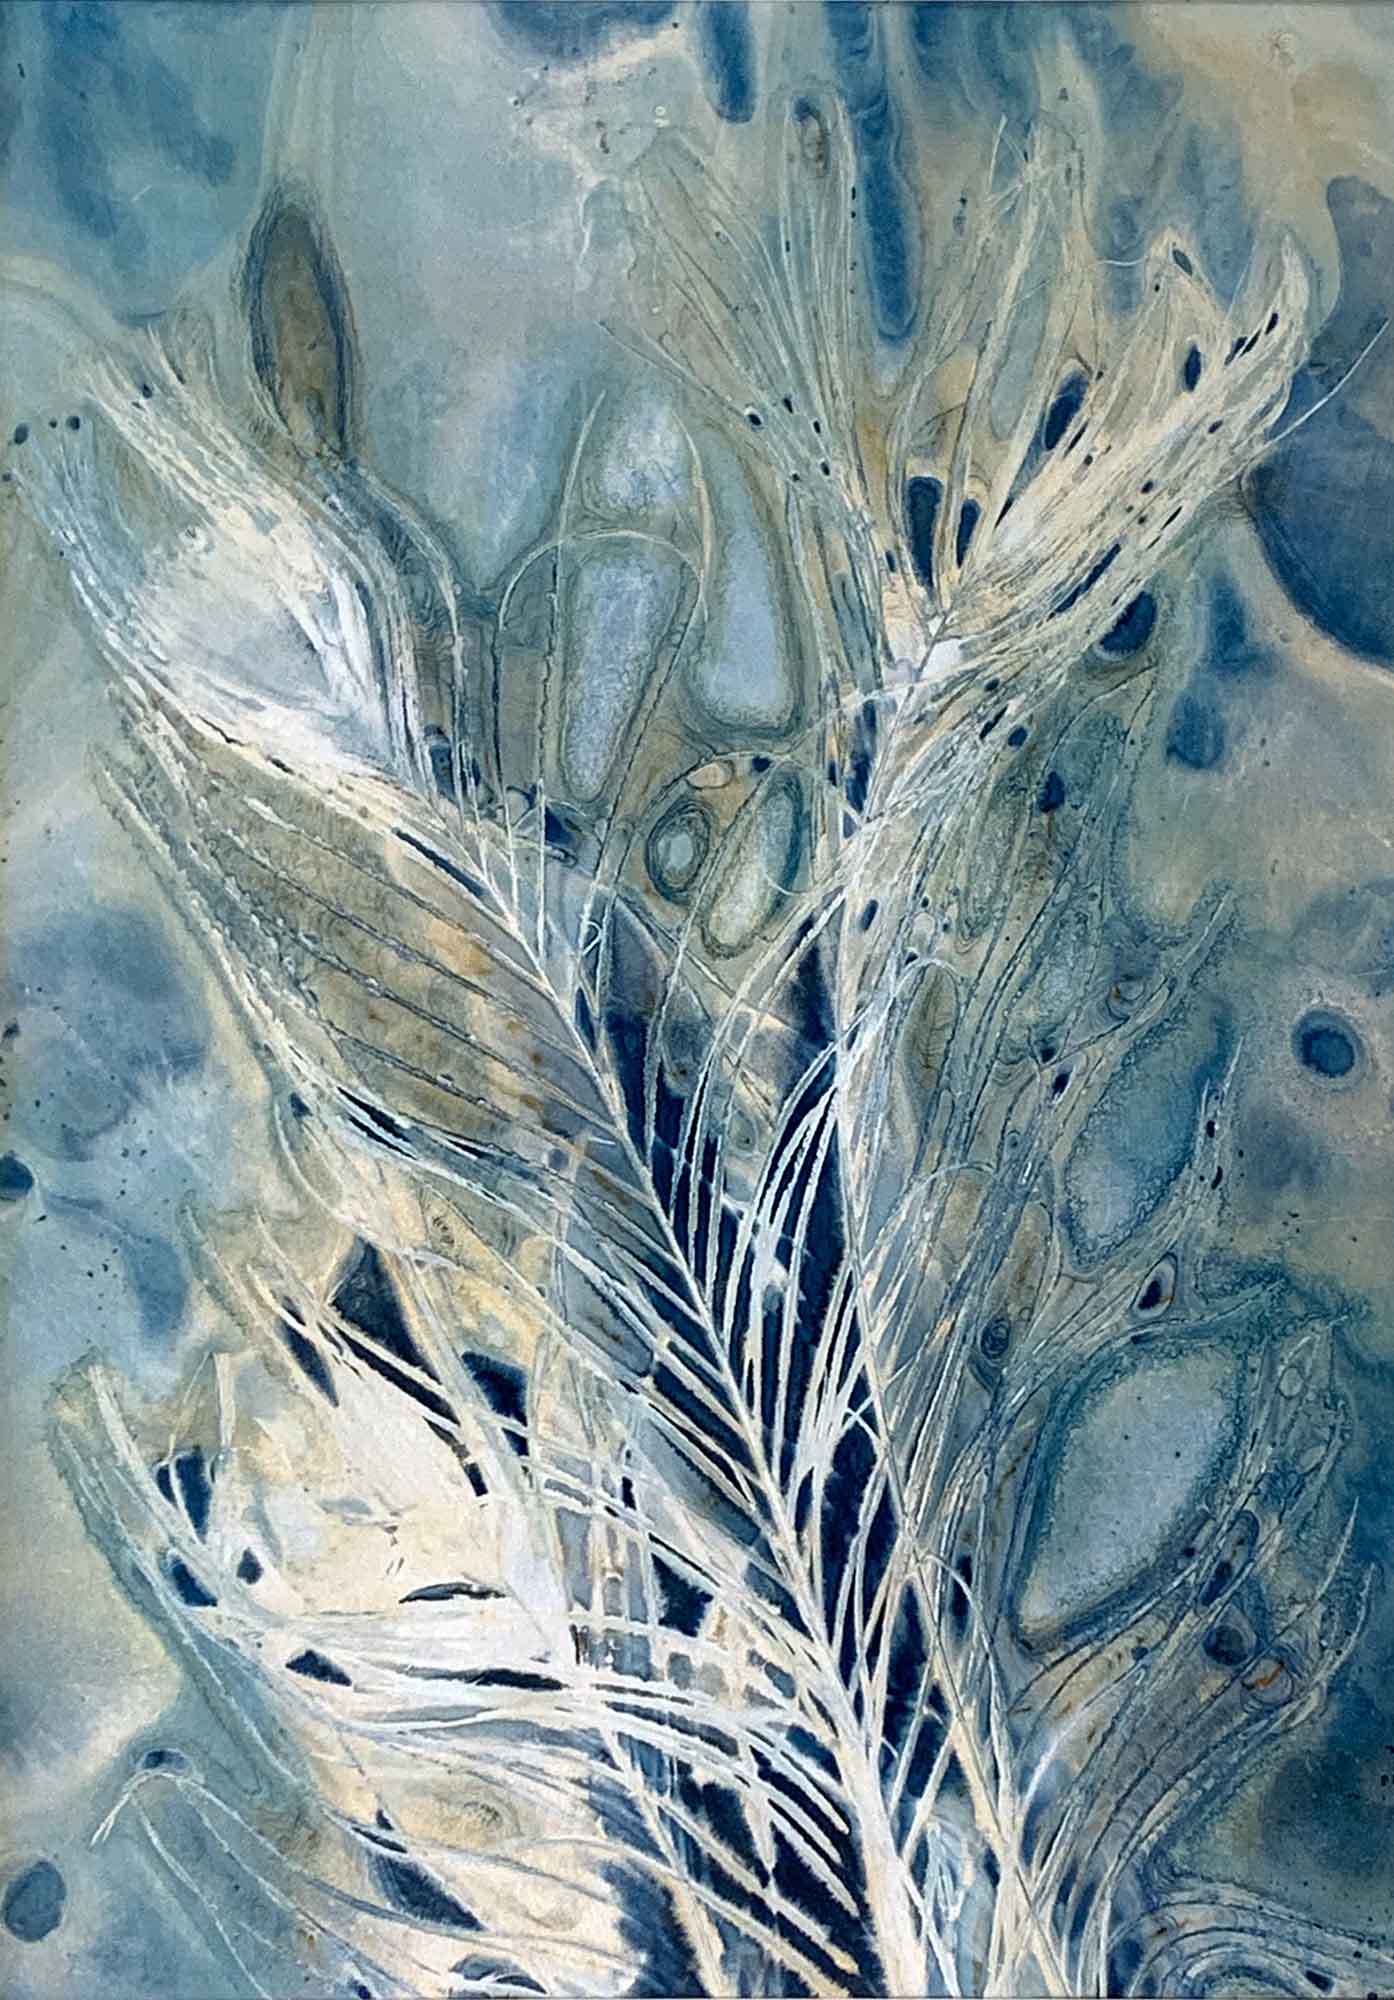 Fanfare - Kim Herringe, wet cyanotype